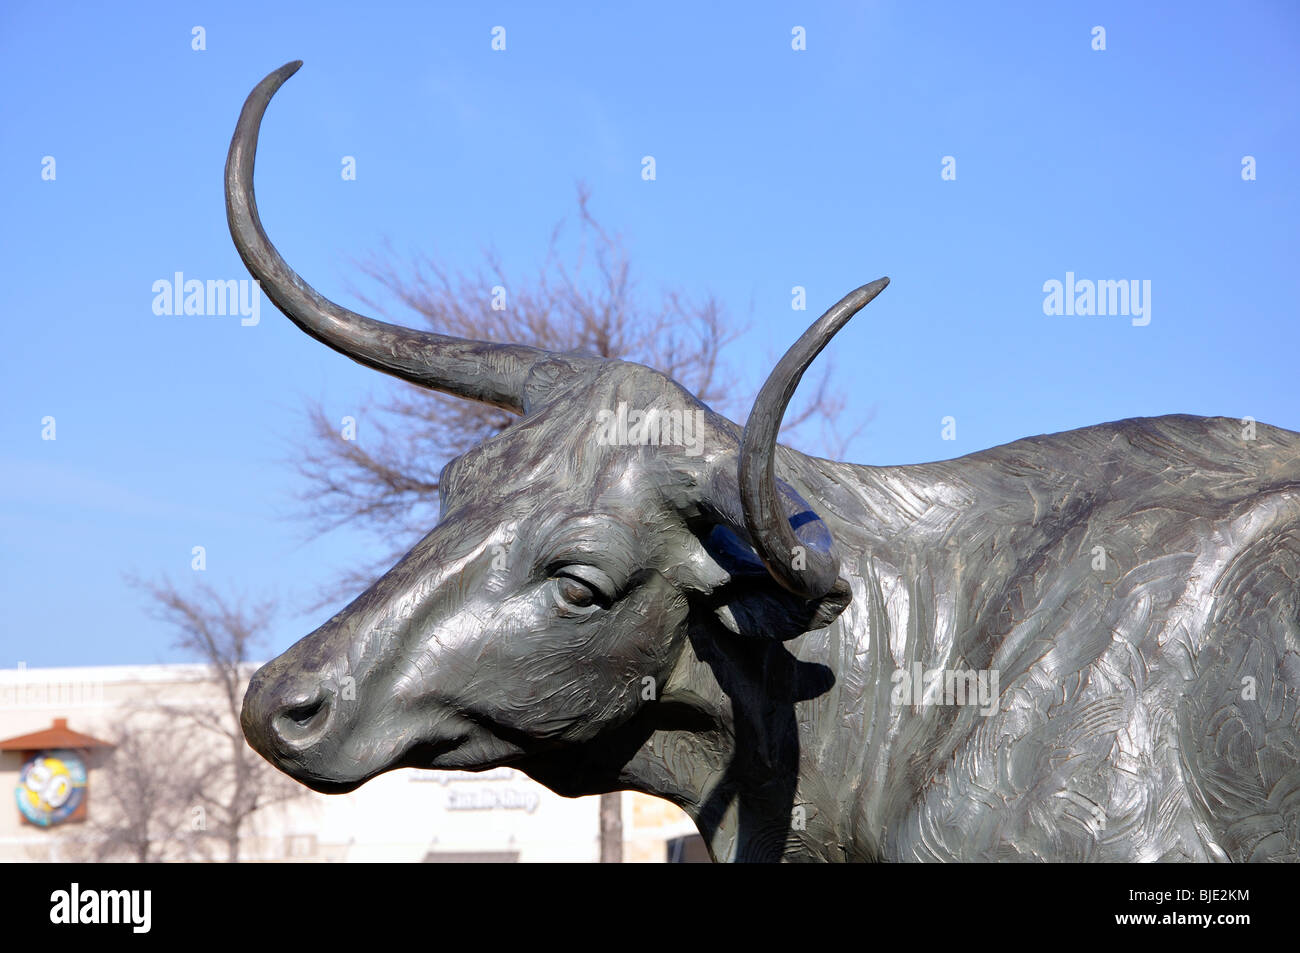 Longhorn sculpture, Frisco, Texas Stock Photo - Alamy